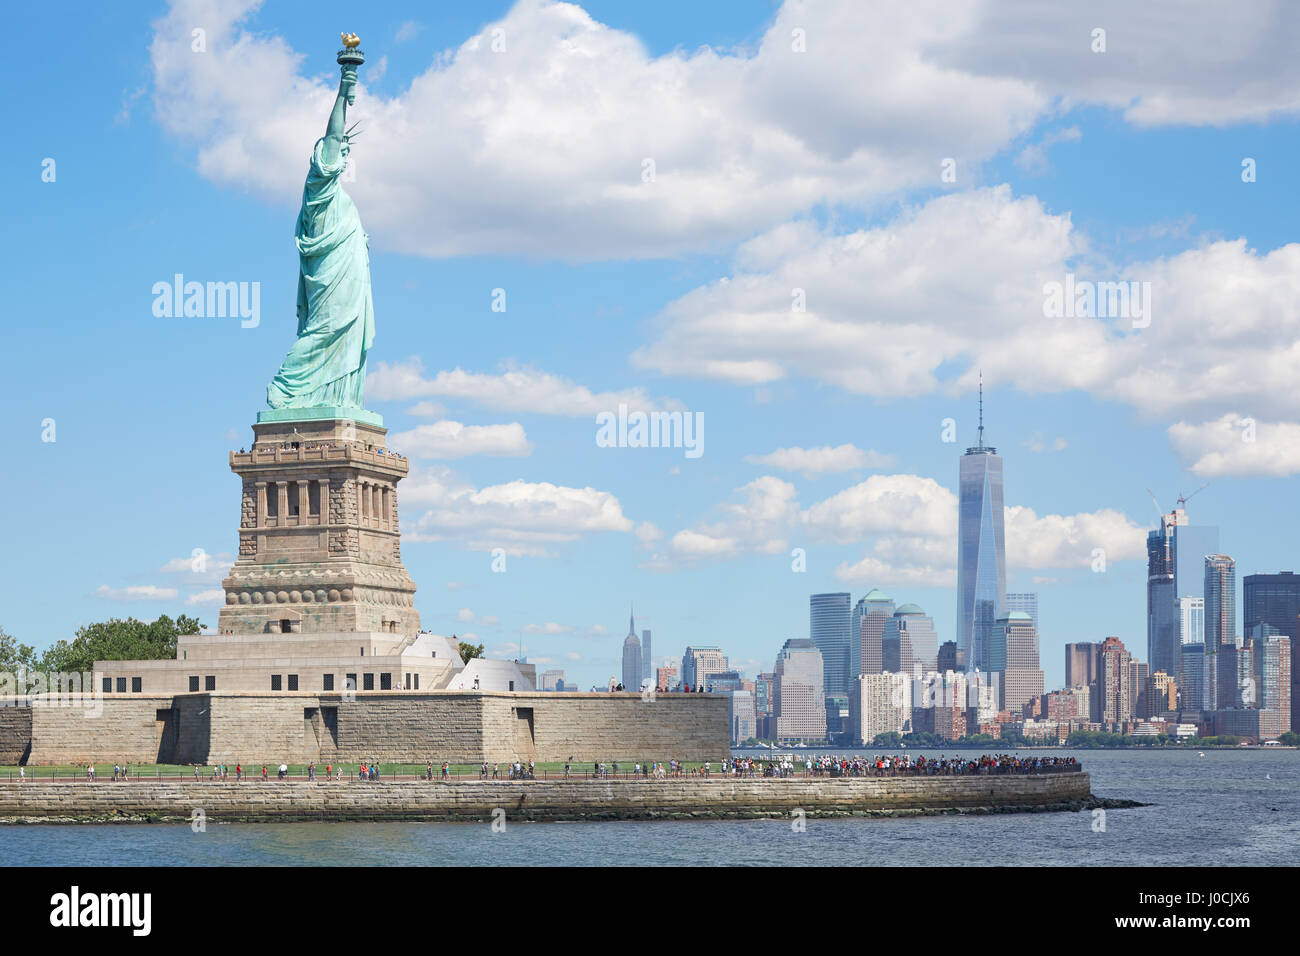 Statue of Liberty island and New York city skyline in sunlight, blue sky Stock Photo